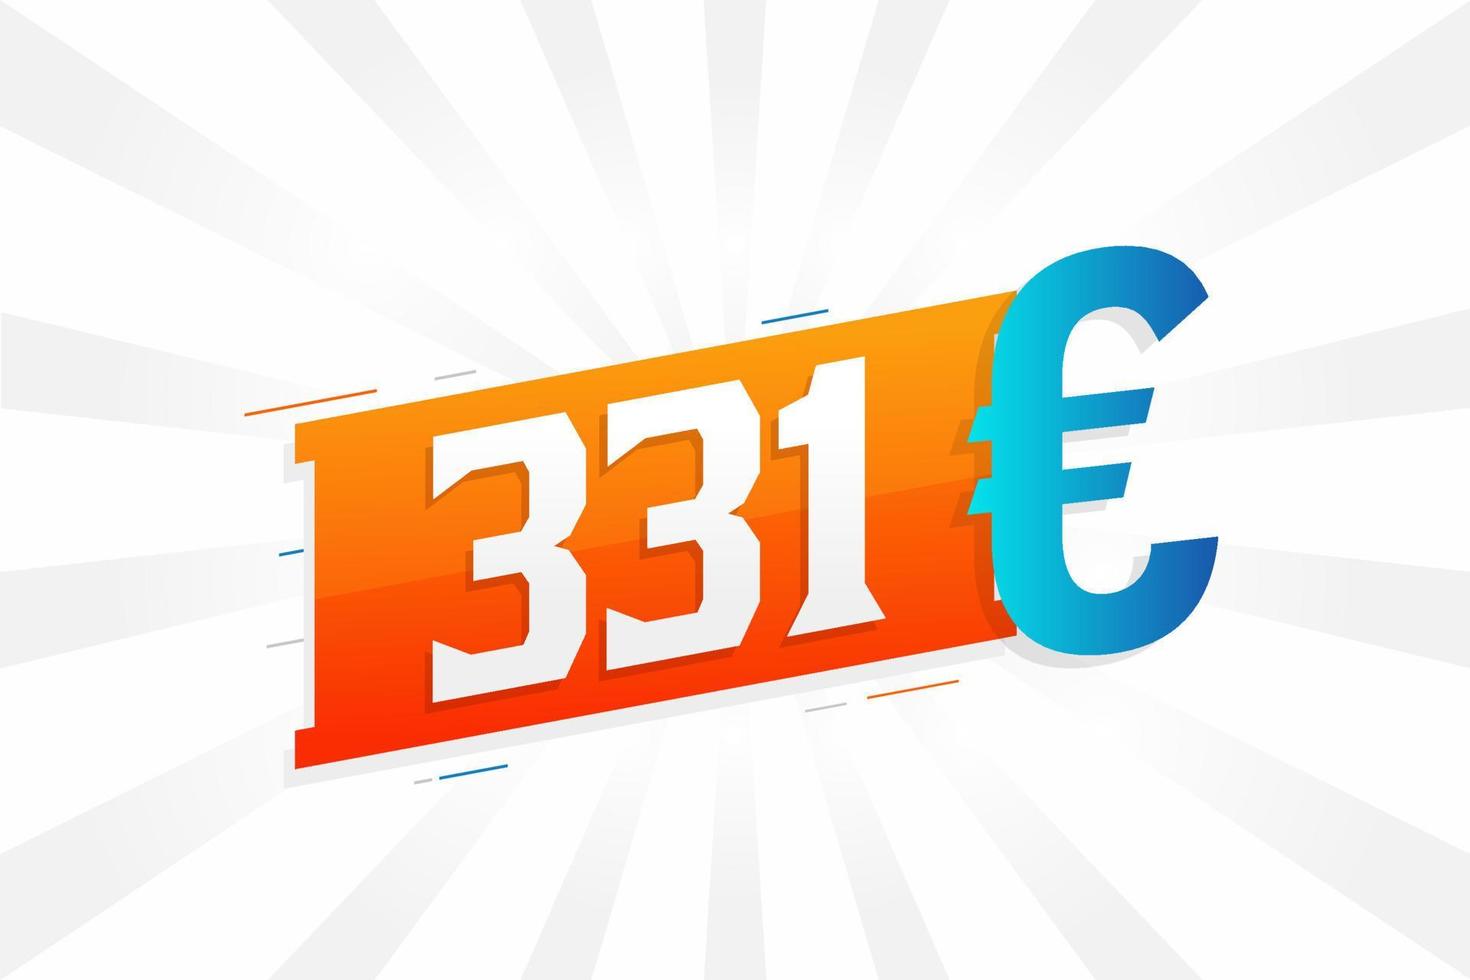 Símbolo de texto vectorial de moneda de 331 euros. 331 euro vector de stock de dinero de la unión europea